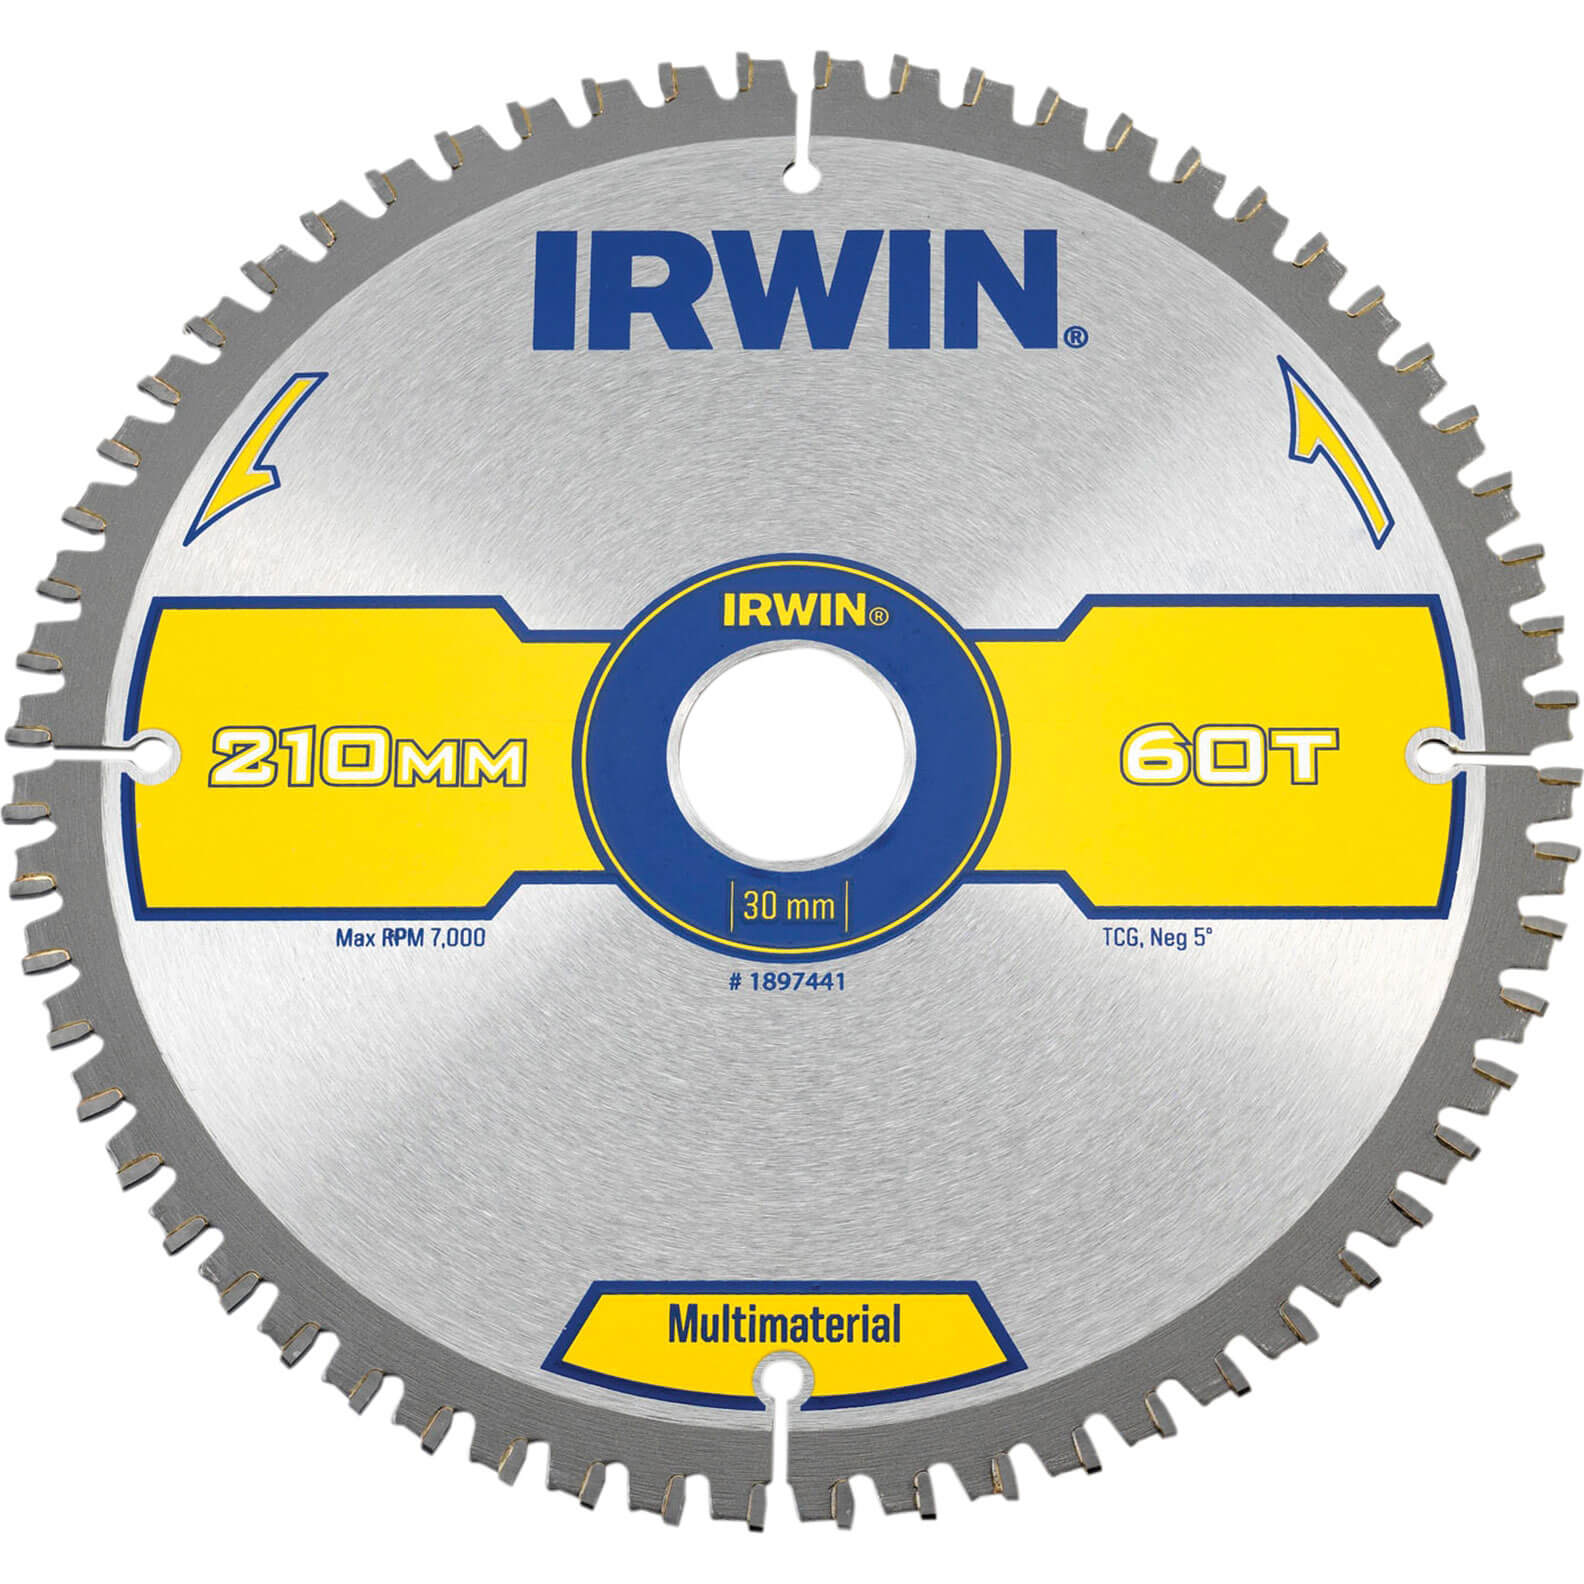 Photos - Power Tool Accessory IRWIN Multi Material Circular Saw Blade 210mm 60T 30mm IRW1897441 